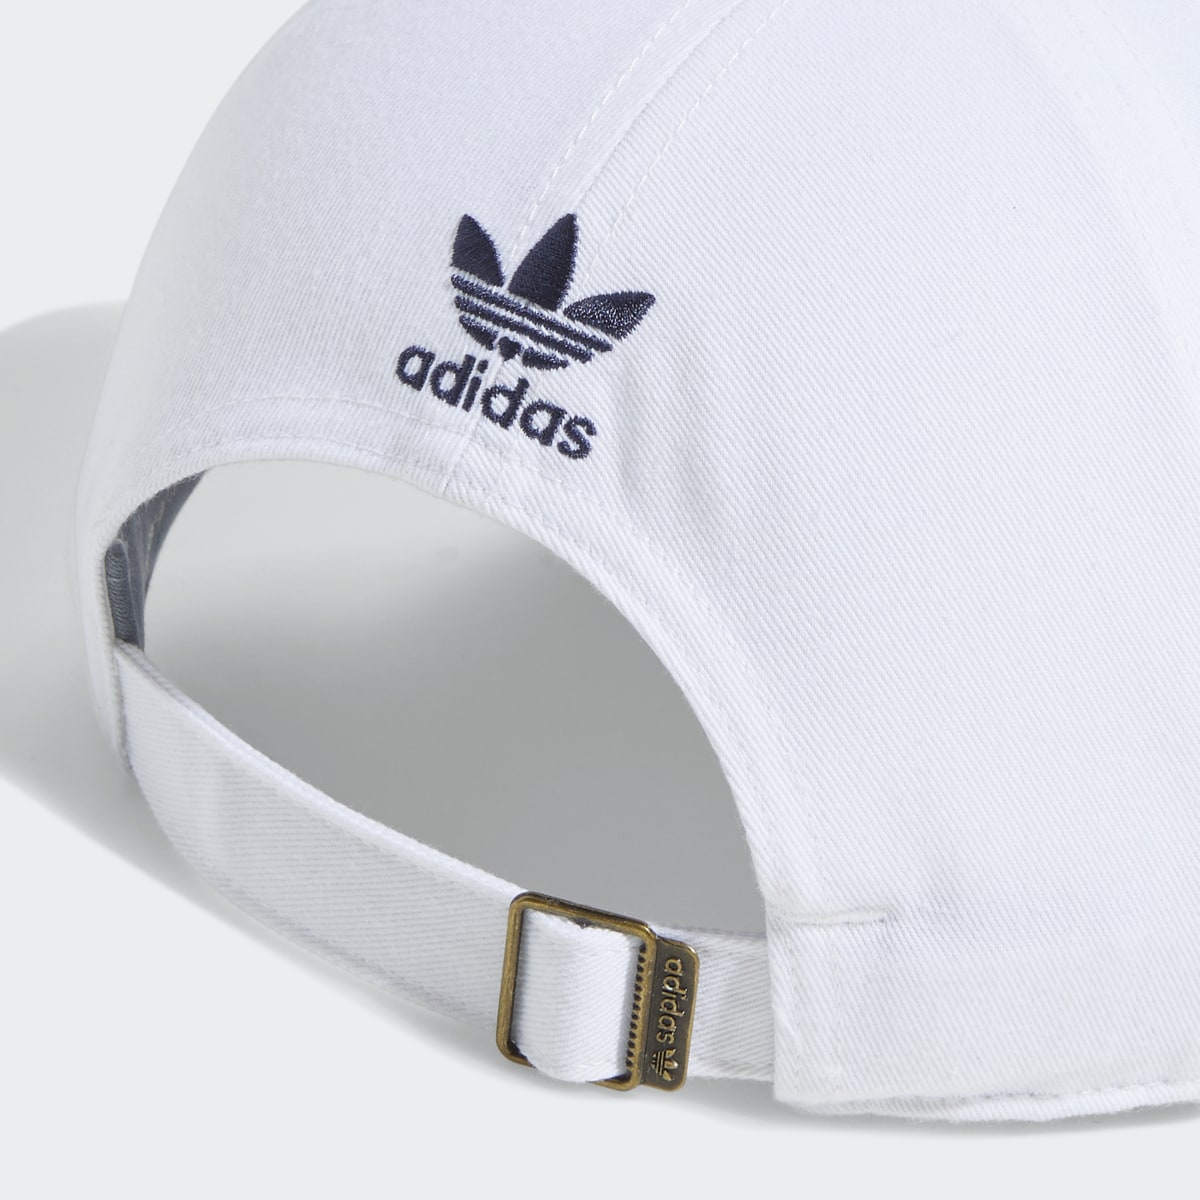 Adidas Union Strapback Hat. 6